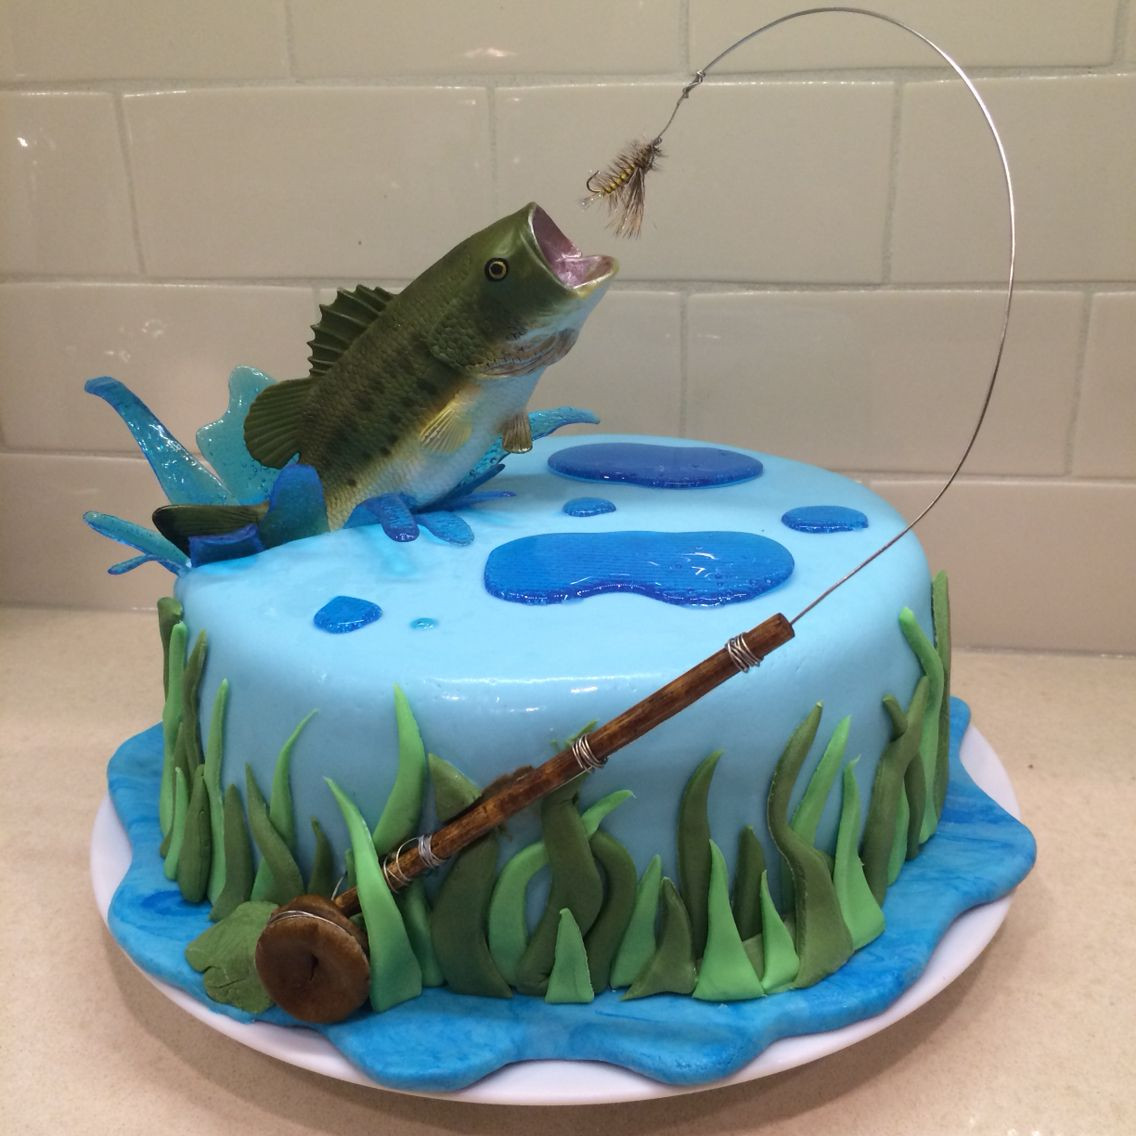 Fishing Birthday Cake Ideas
 21 Marvelous Picture of Fish Birthday Cakes davemelillo